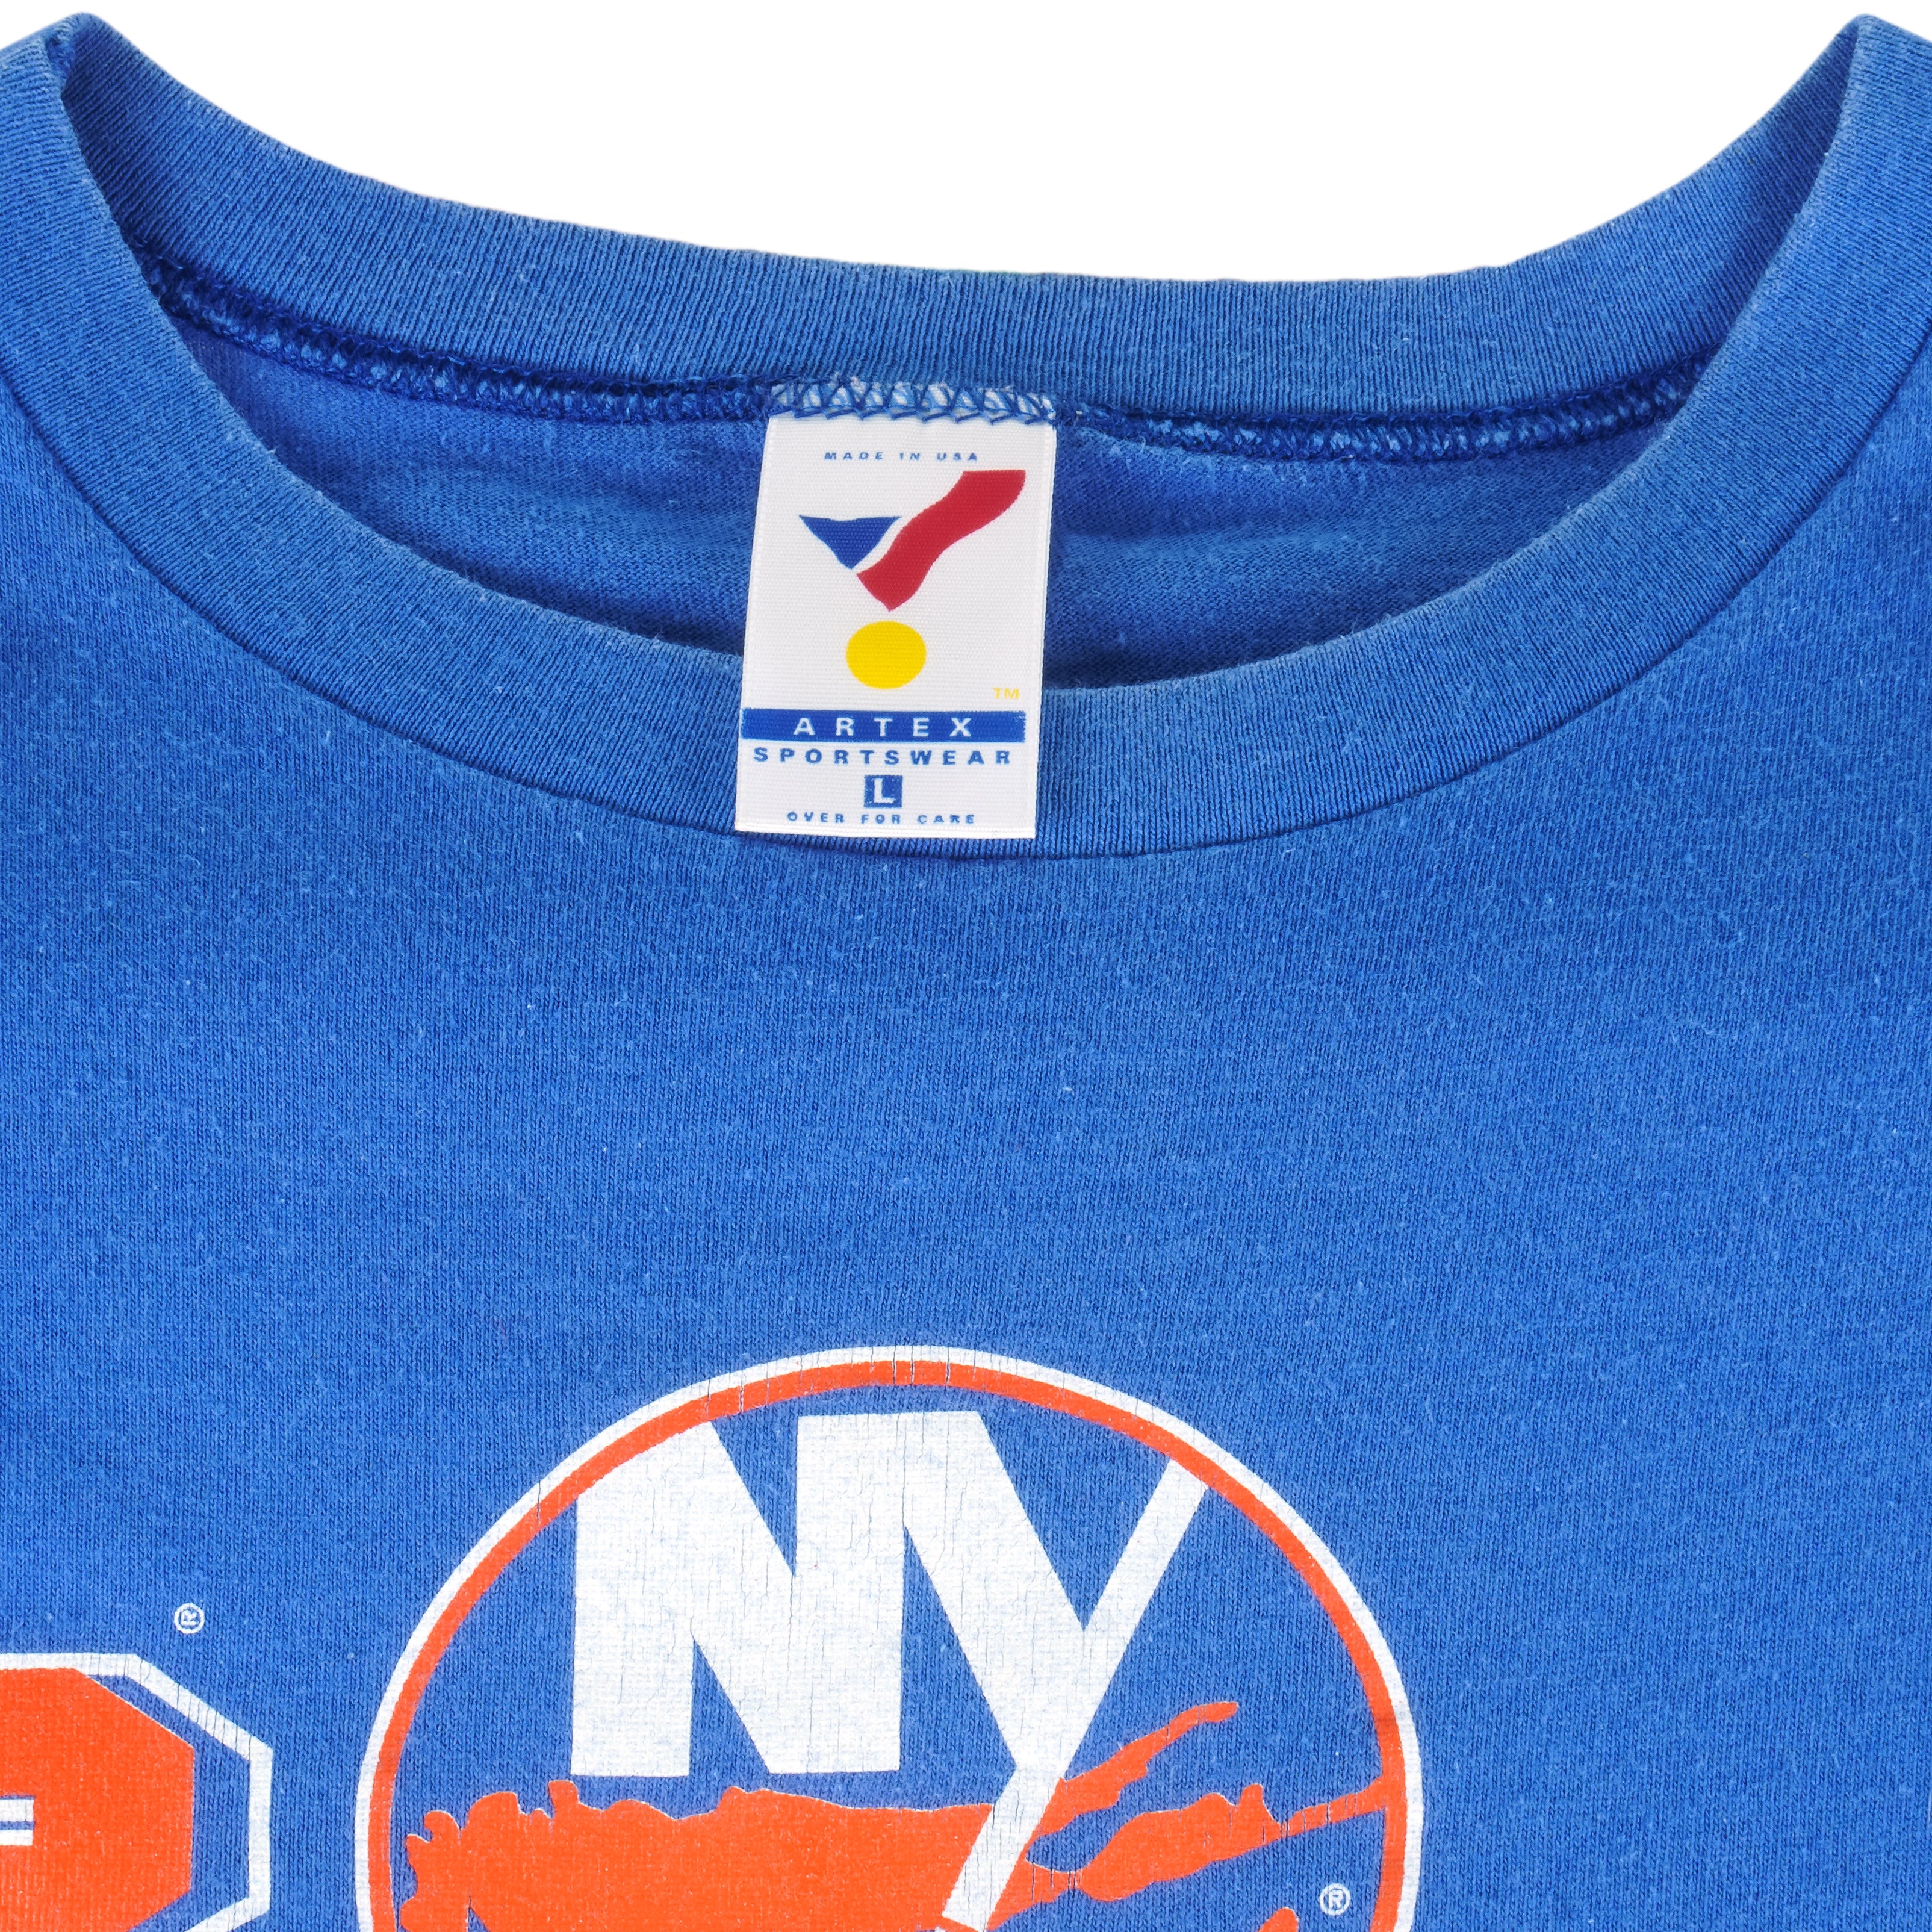 New York Islanders Apparel, Islanders Gear, New York Islanders Shop